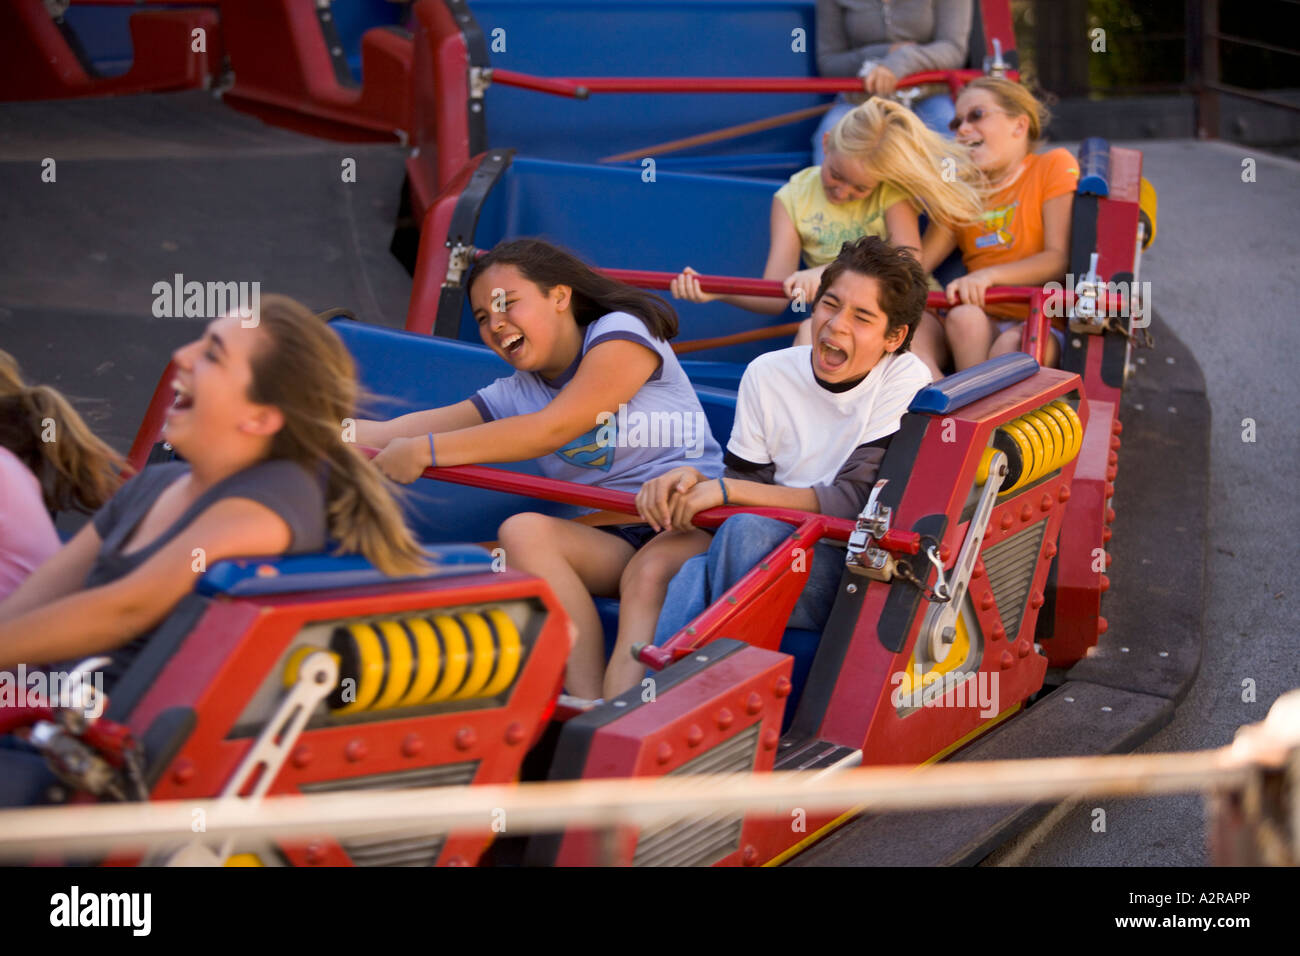 Atom Smasher Six Flags Magic Mountain Rides Valencia California United States of America Stock Photo